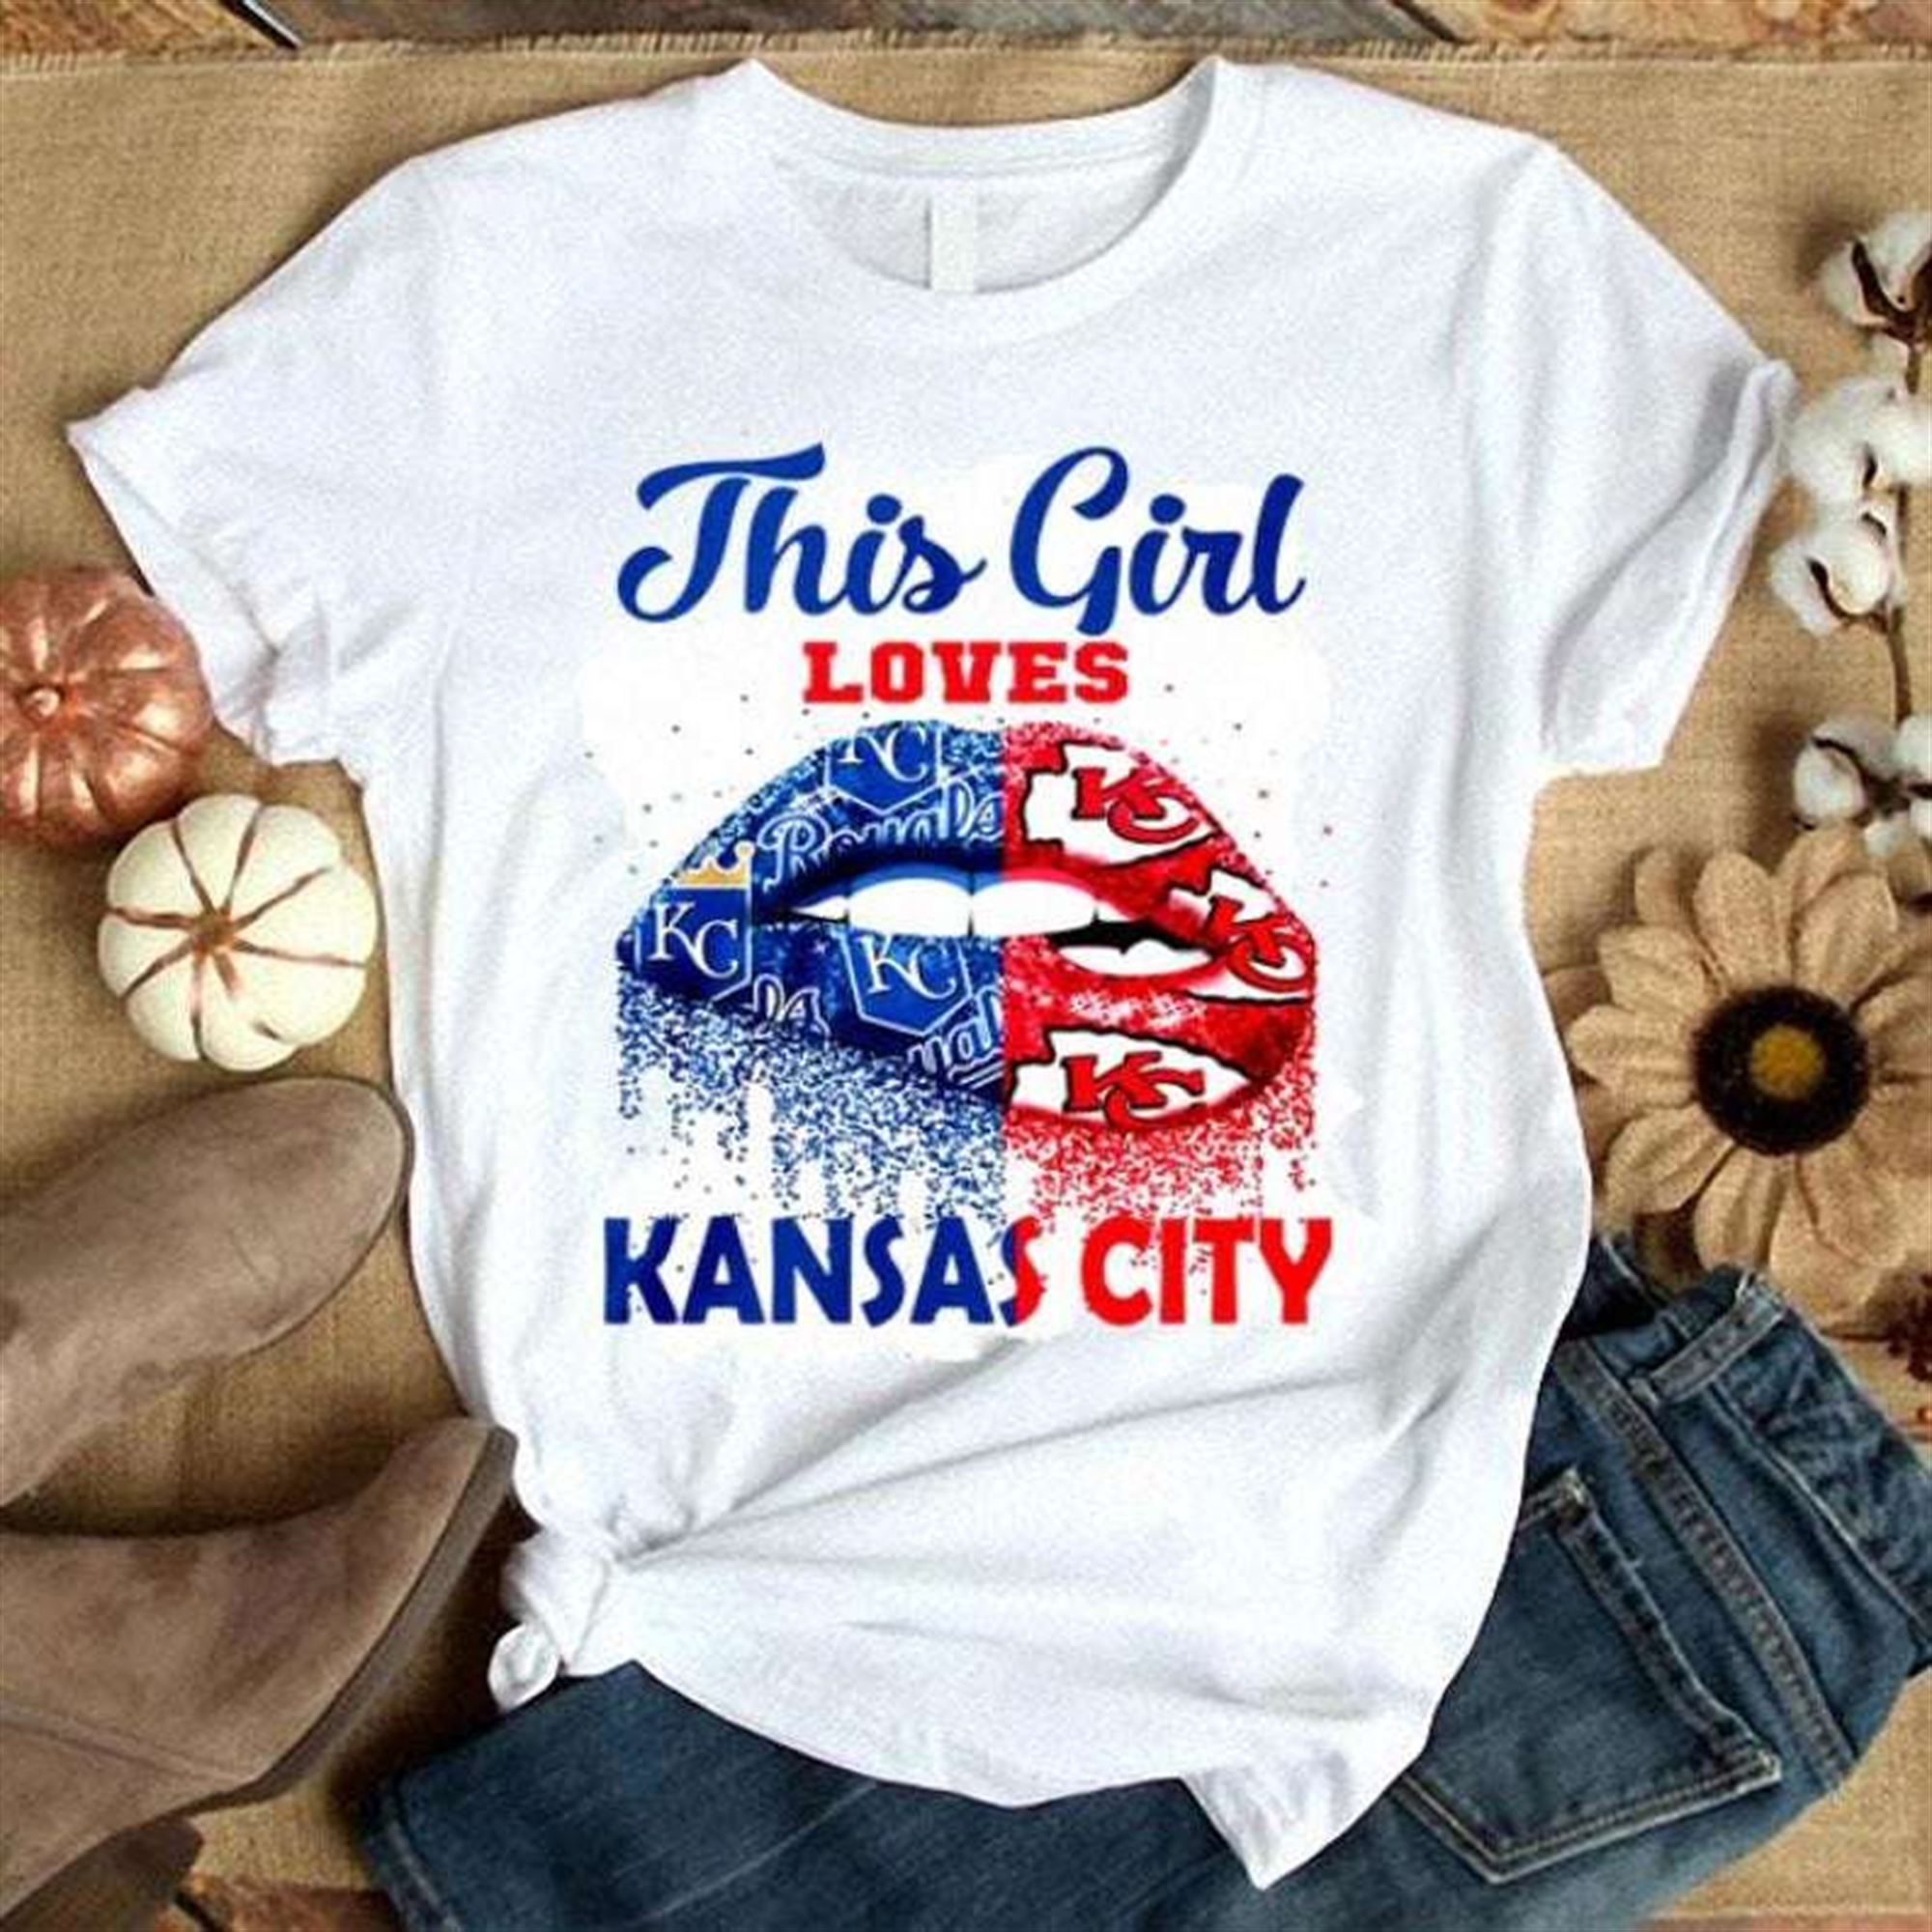 This Girl Love Kansas City Chiefs And Kansas City Royals T-shirt Size Up To 5xl